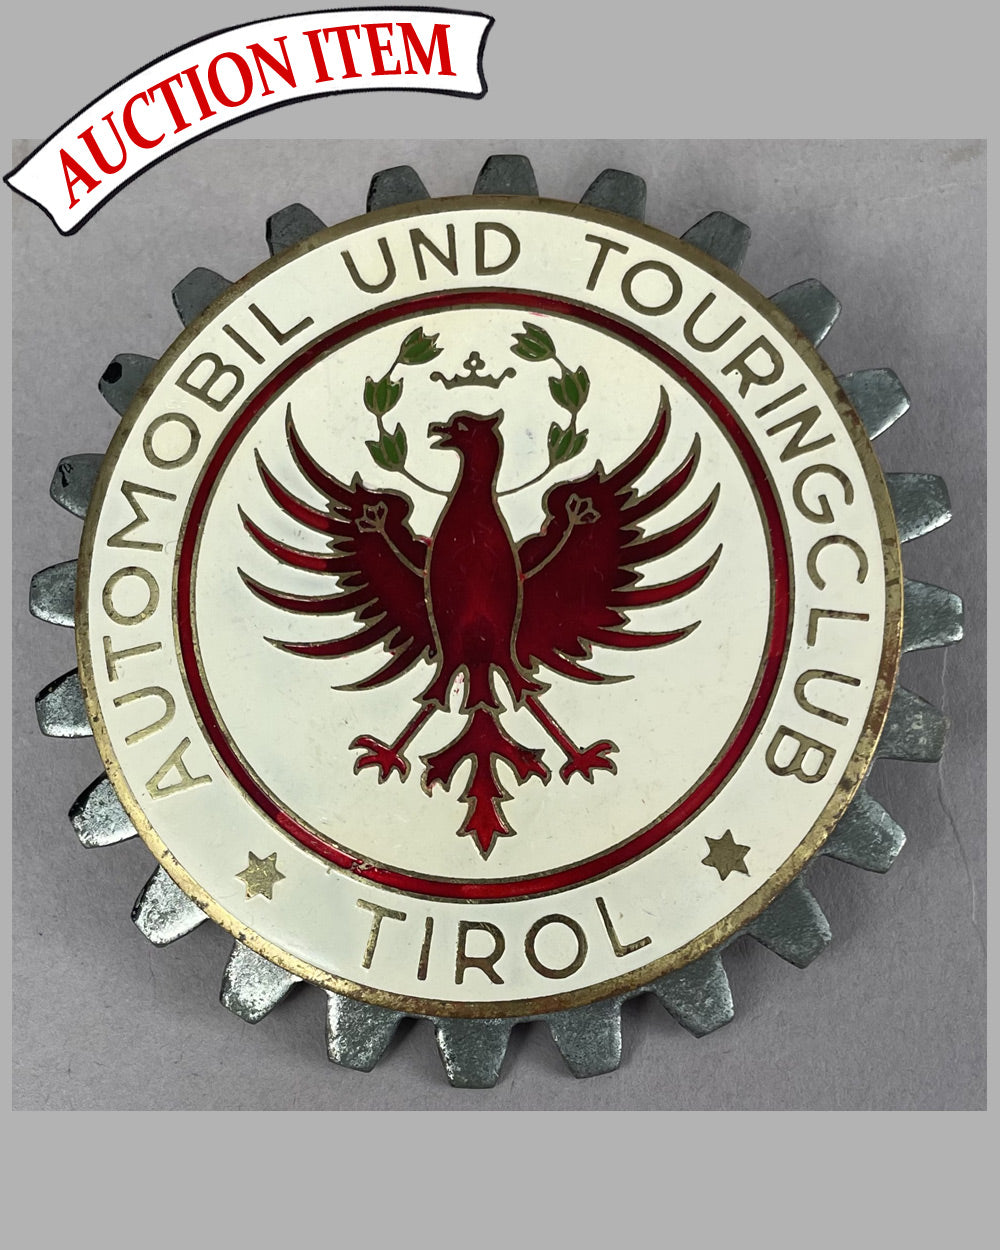 13 - Automobile Club und Touring Club Tirol (Austria)